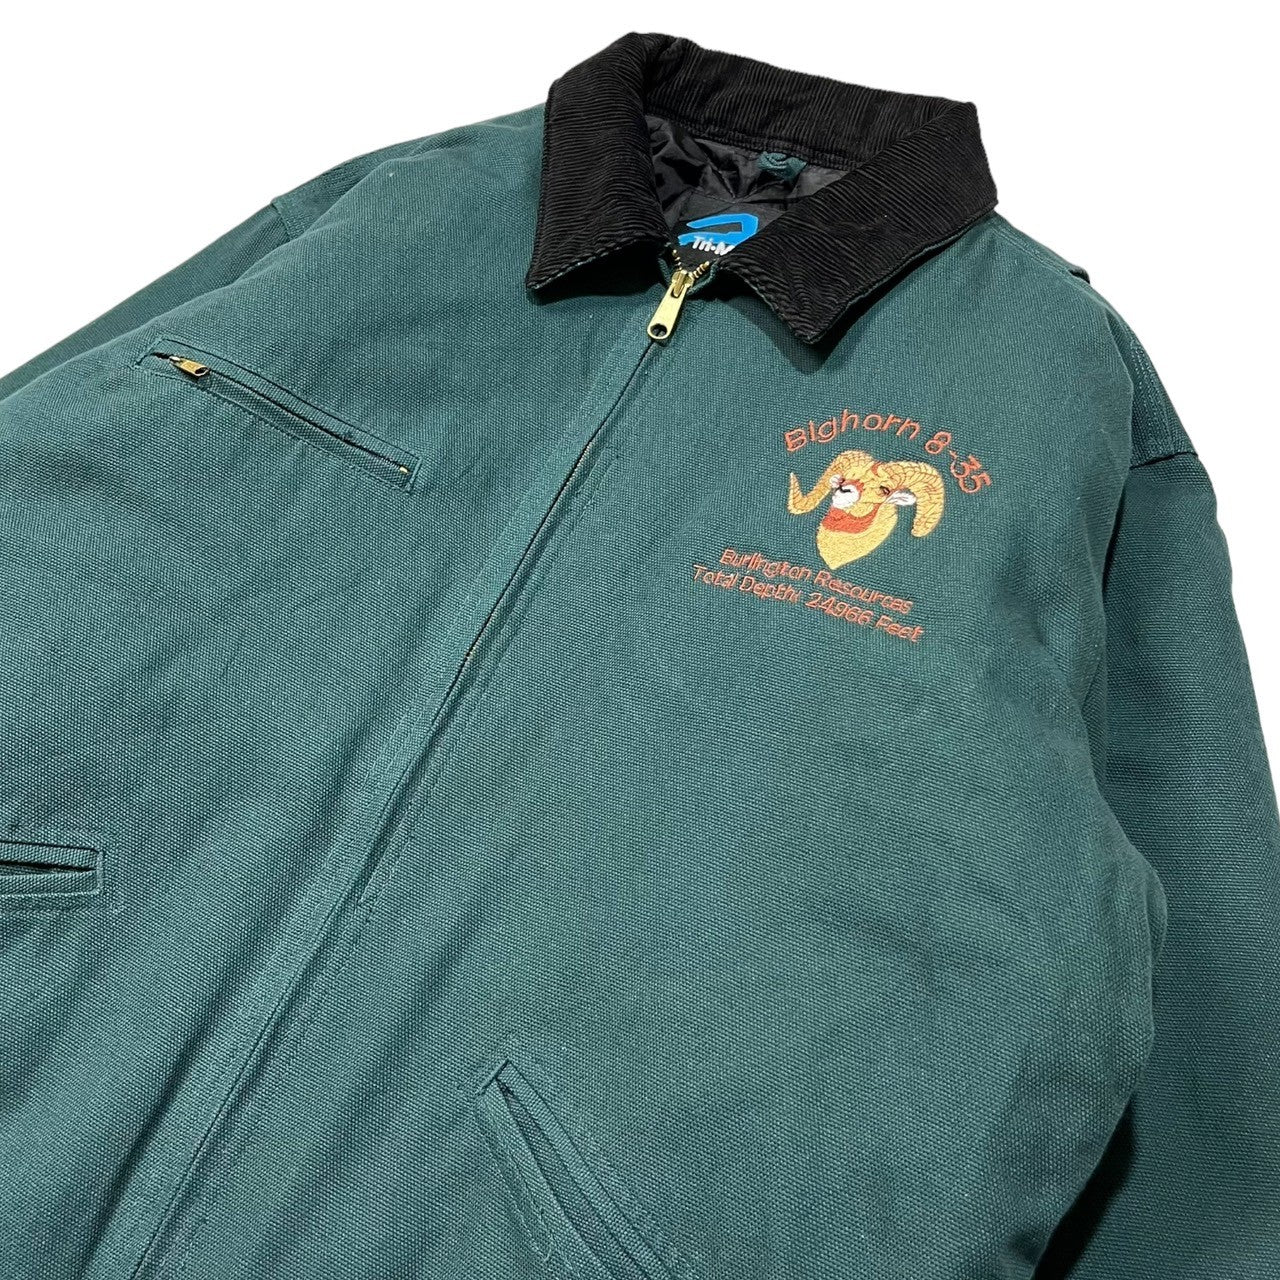 Tn-Mountain(ティーエヌマウンテン) 90's Duck fabric work jacket